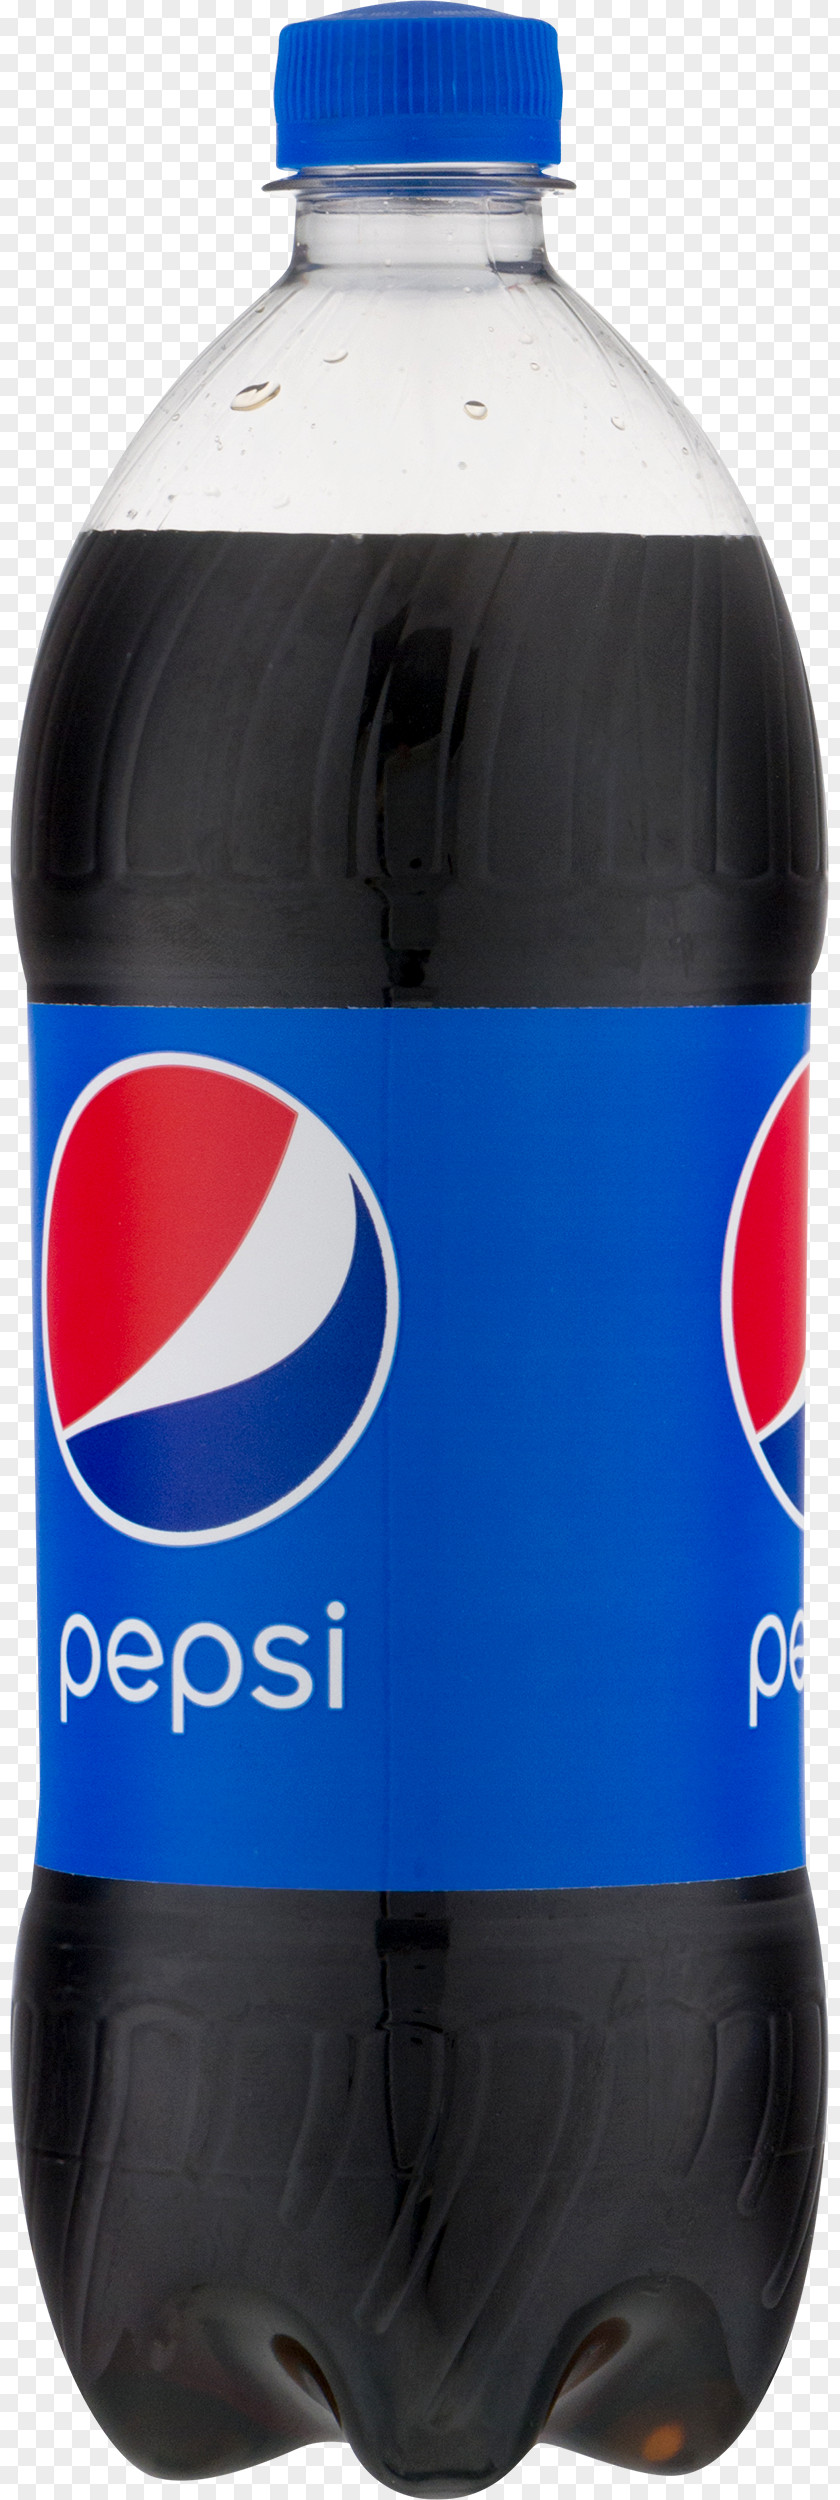 Pepsi Fizzy Drinks One Juice Diet Coke PNG